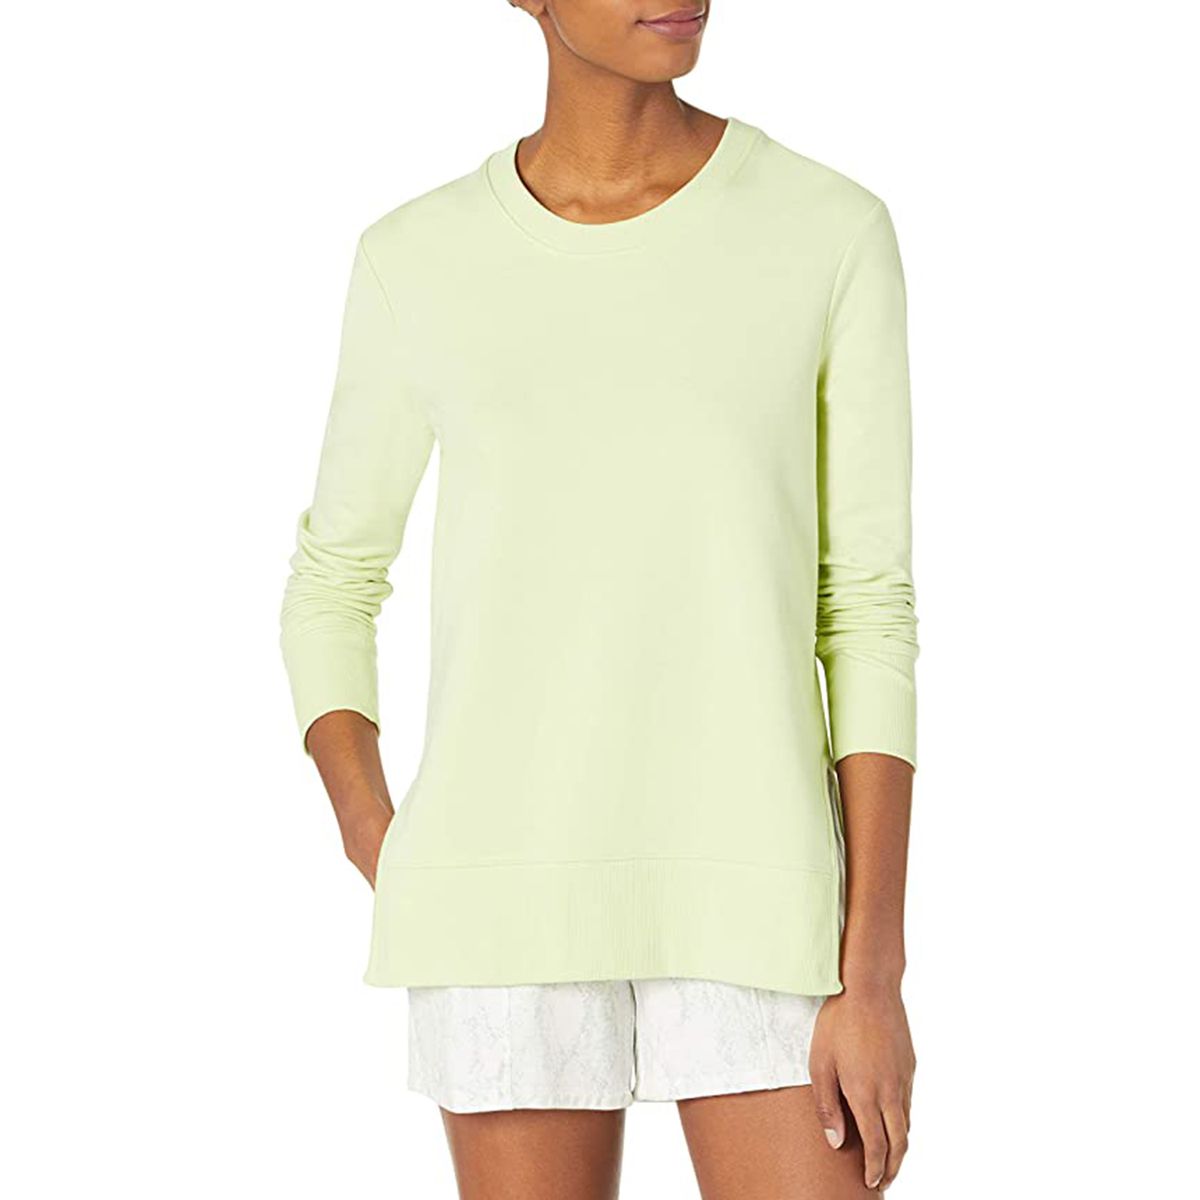 Amazon Brand Daily Ritual Women's Terry Cotton Sweatshirt Jogger